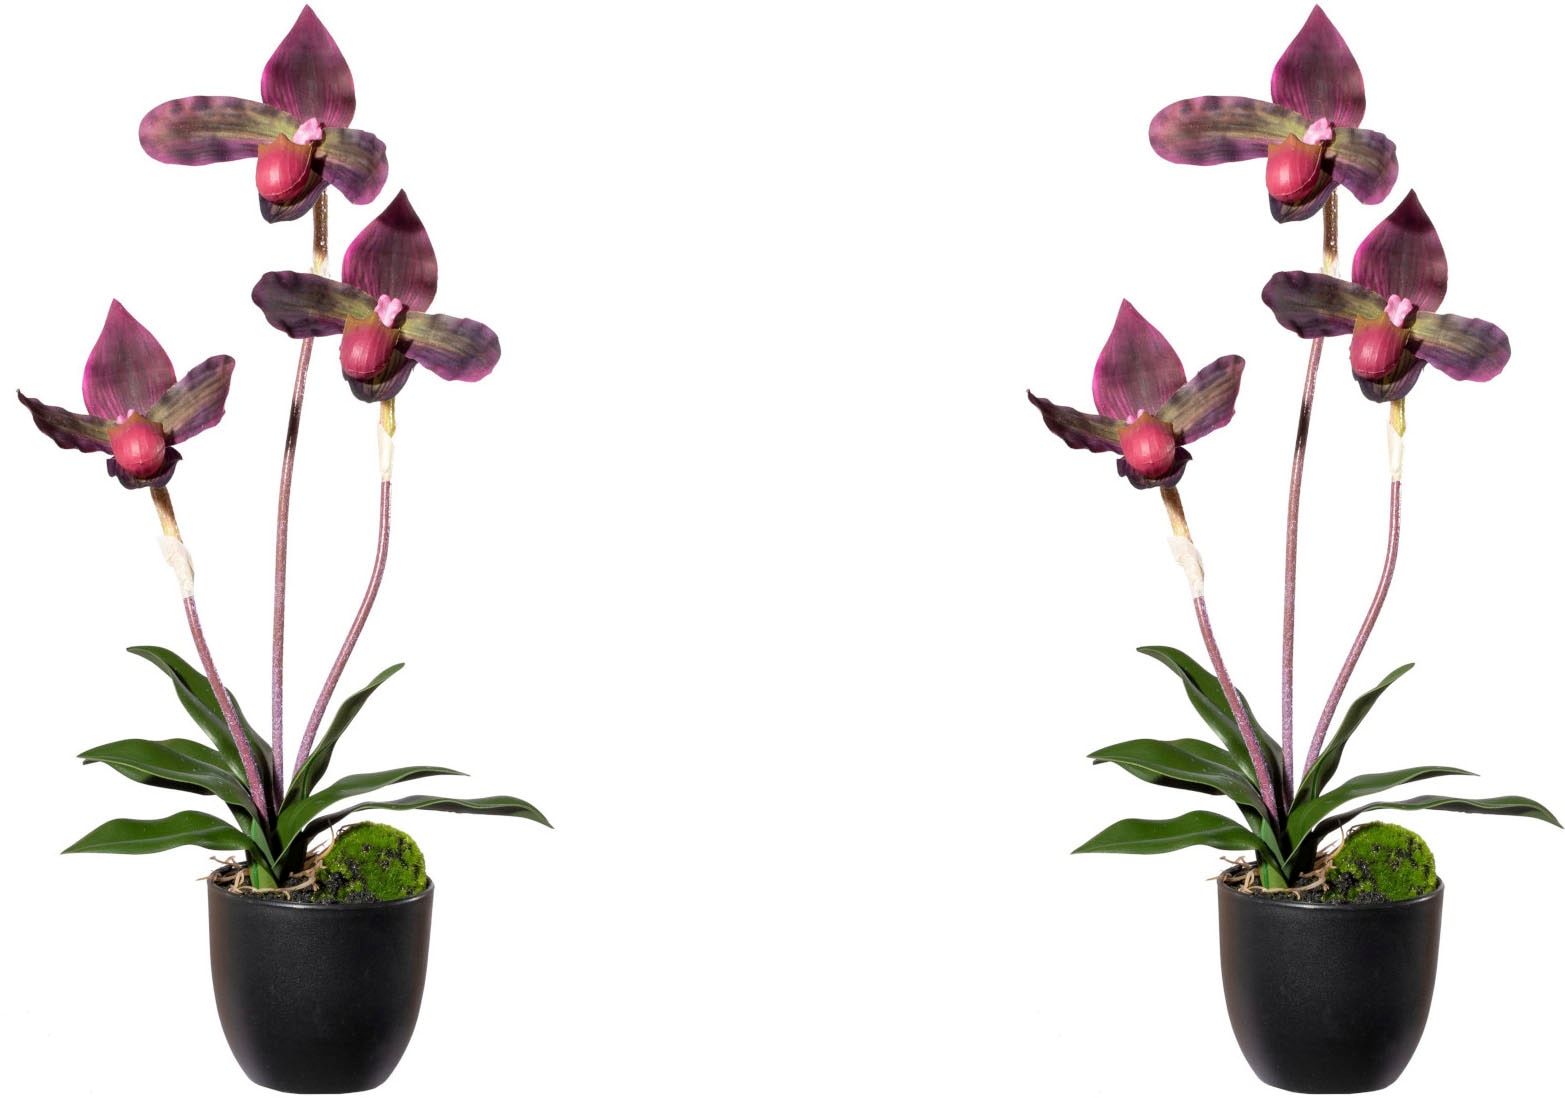 Kunstorchidee »Orchidee Frauenschuh«, mit Real-Touch-Blüten